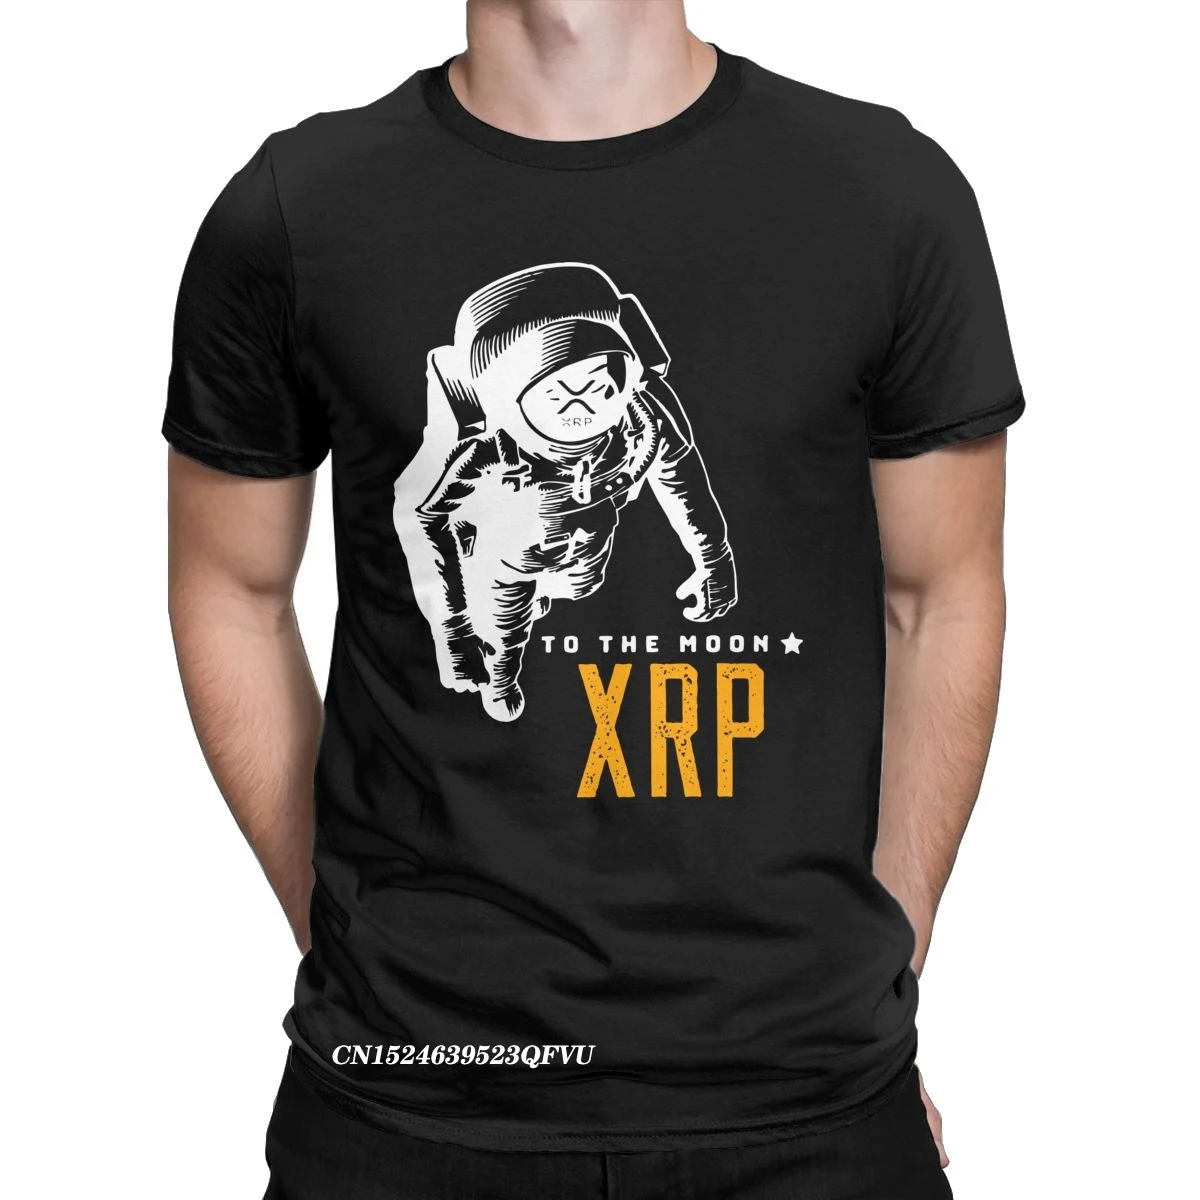 Amazing Ripple XRP Moon Tee Shirt Men Crew Neck Cotton Tops T Shirts Bitcoin Crypto Harajuku Tees Party Clothing